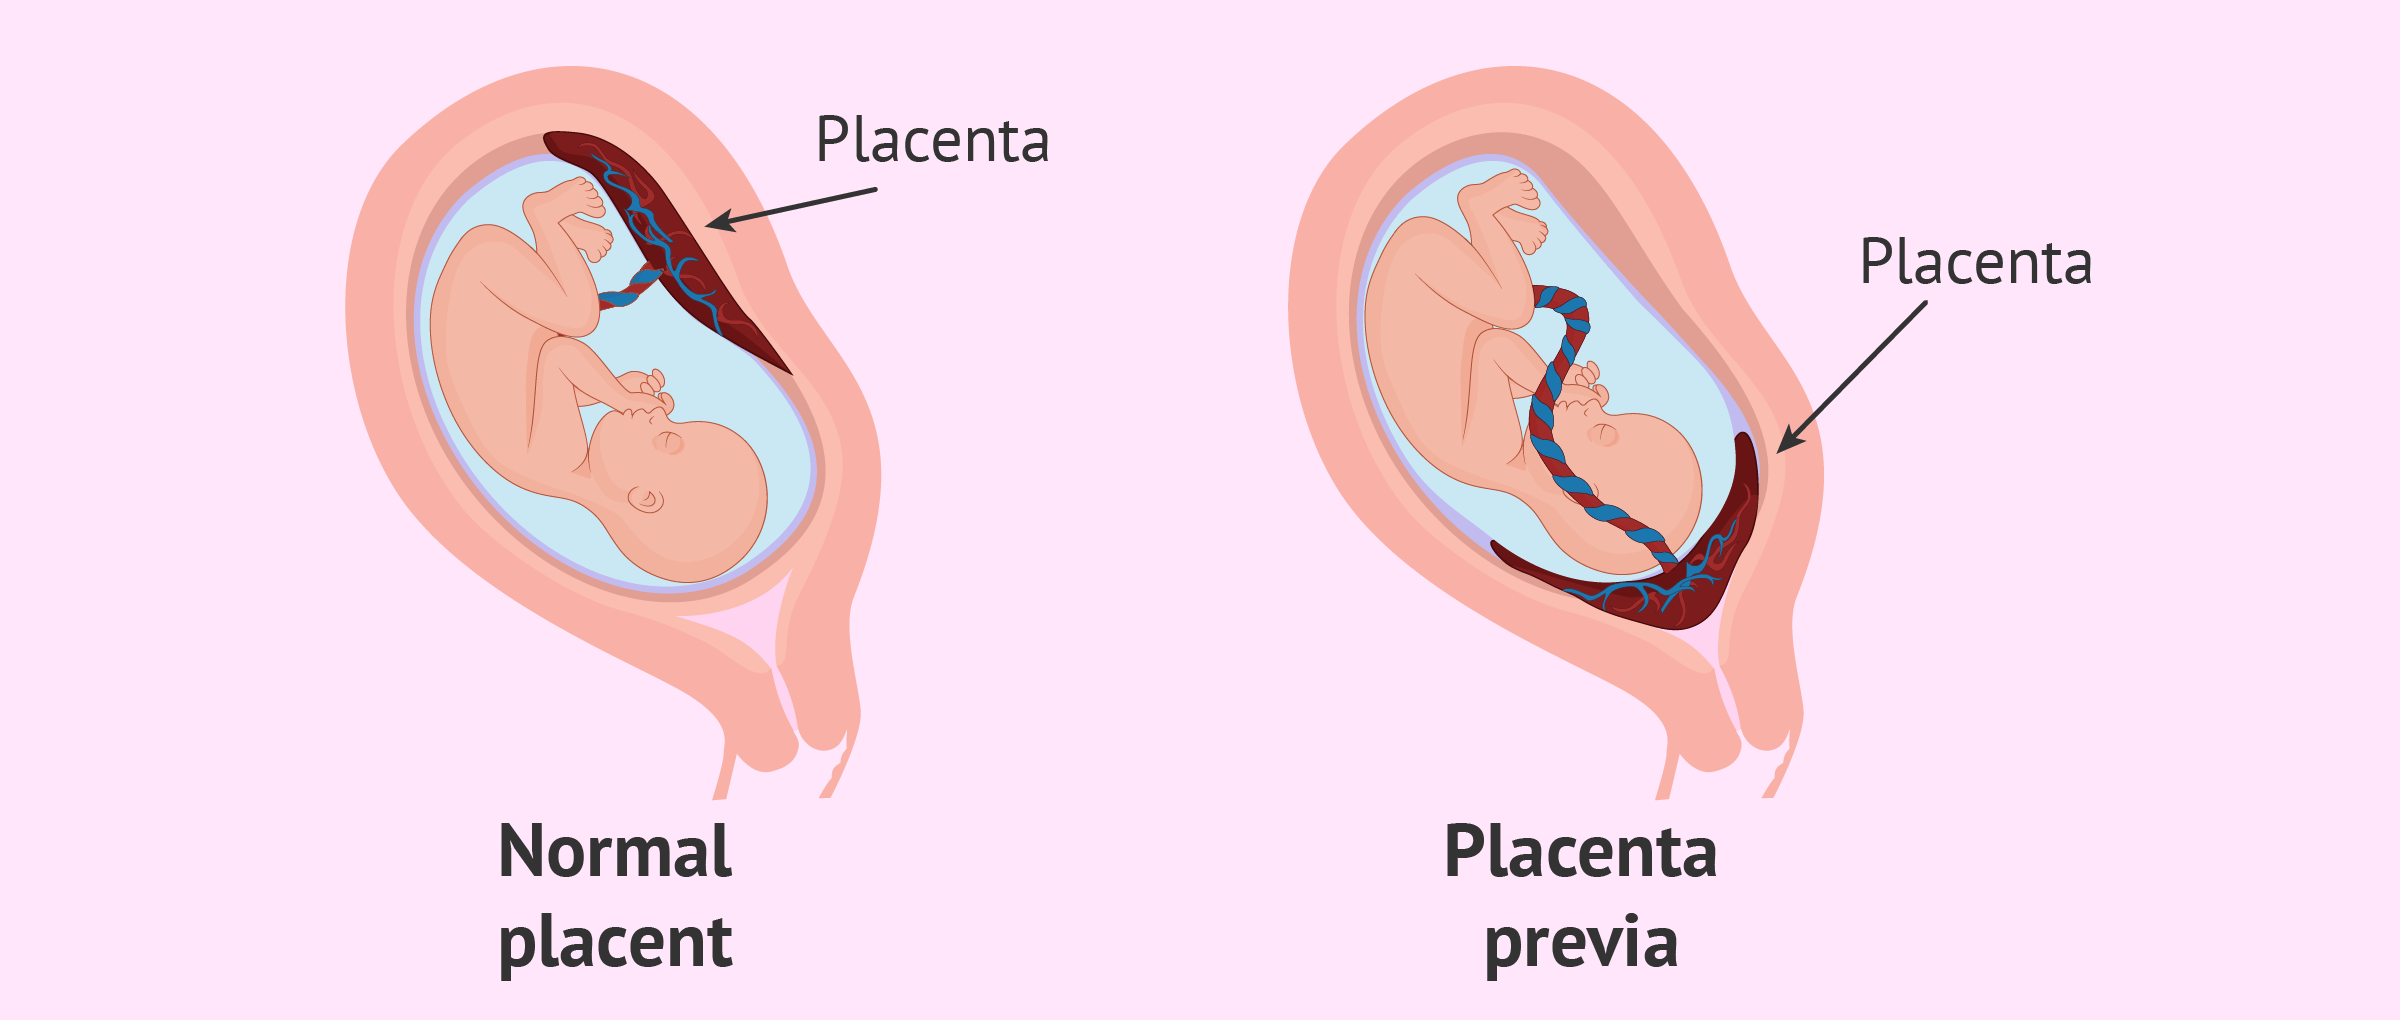 Placenta previa in twin pregnancy